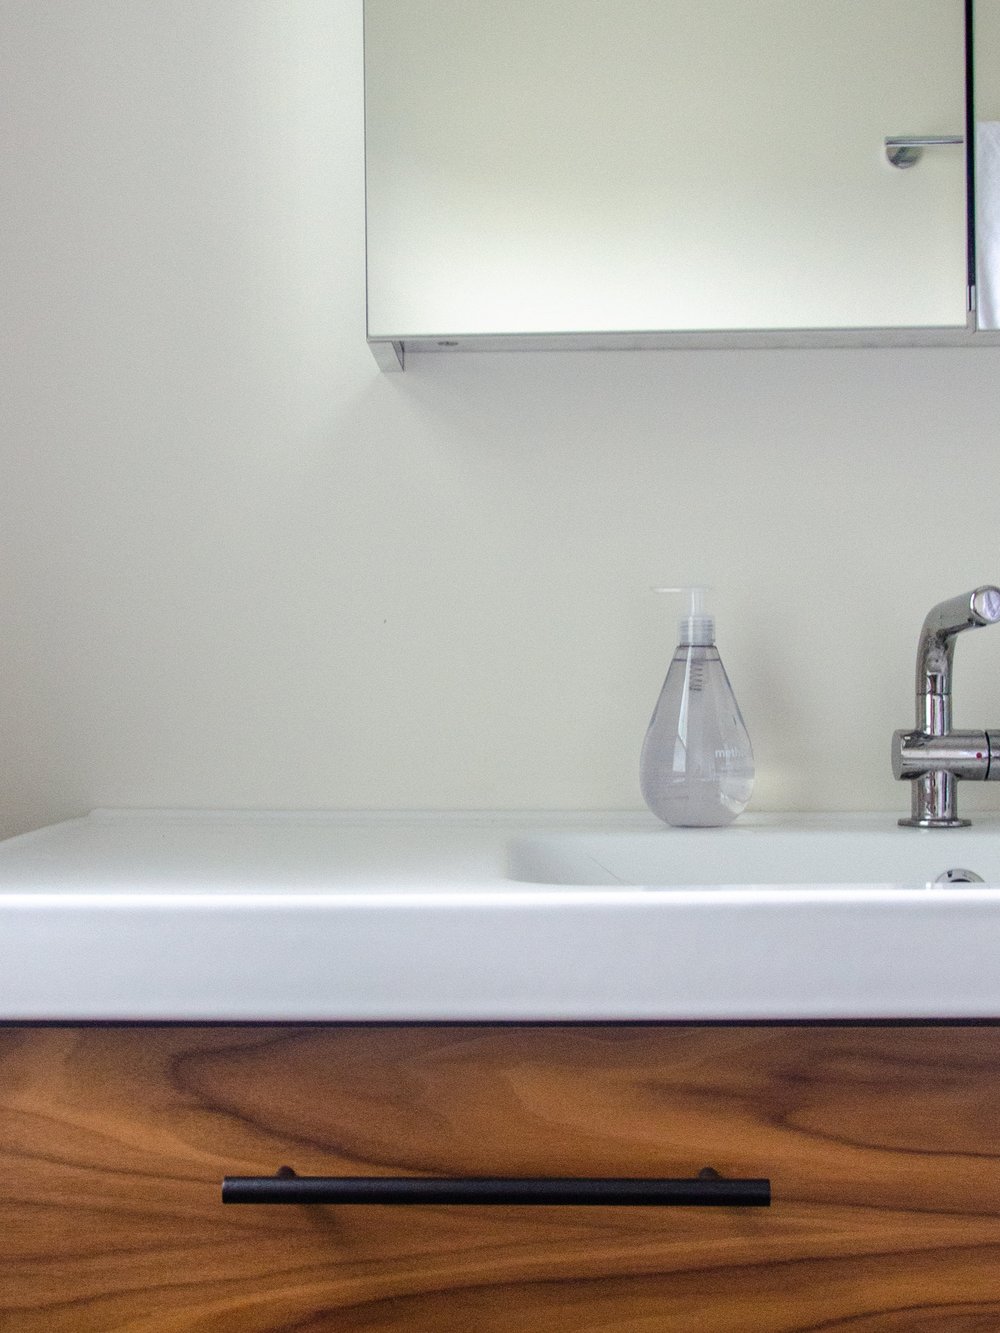 Ikea Morgon Bathroom Vanity And Mirror Our Review Salt Rook - Ikea Bathroom Vanity Drawer Removal